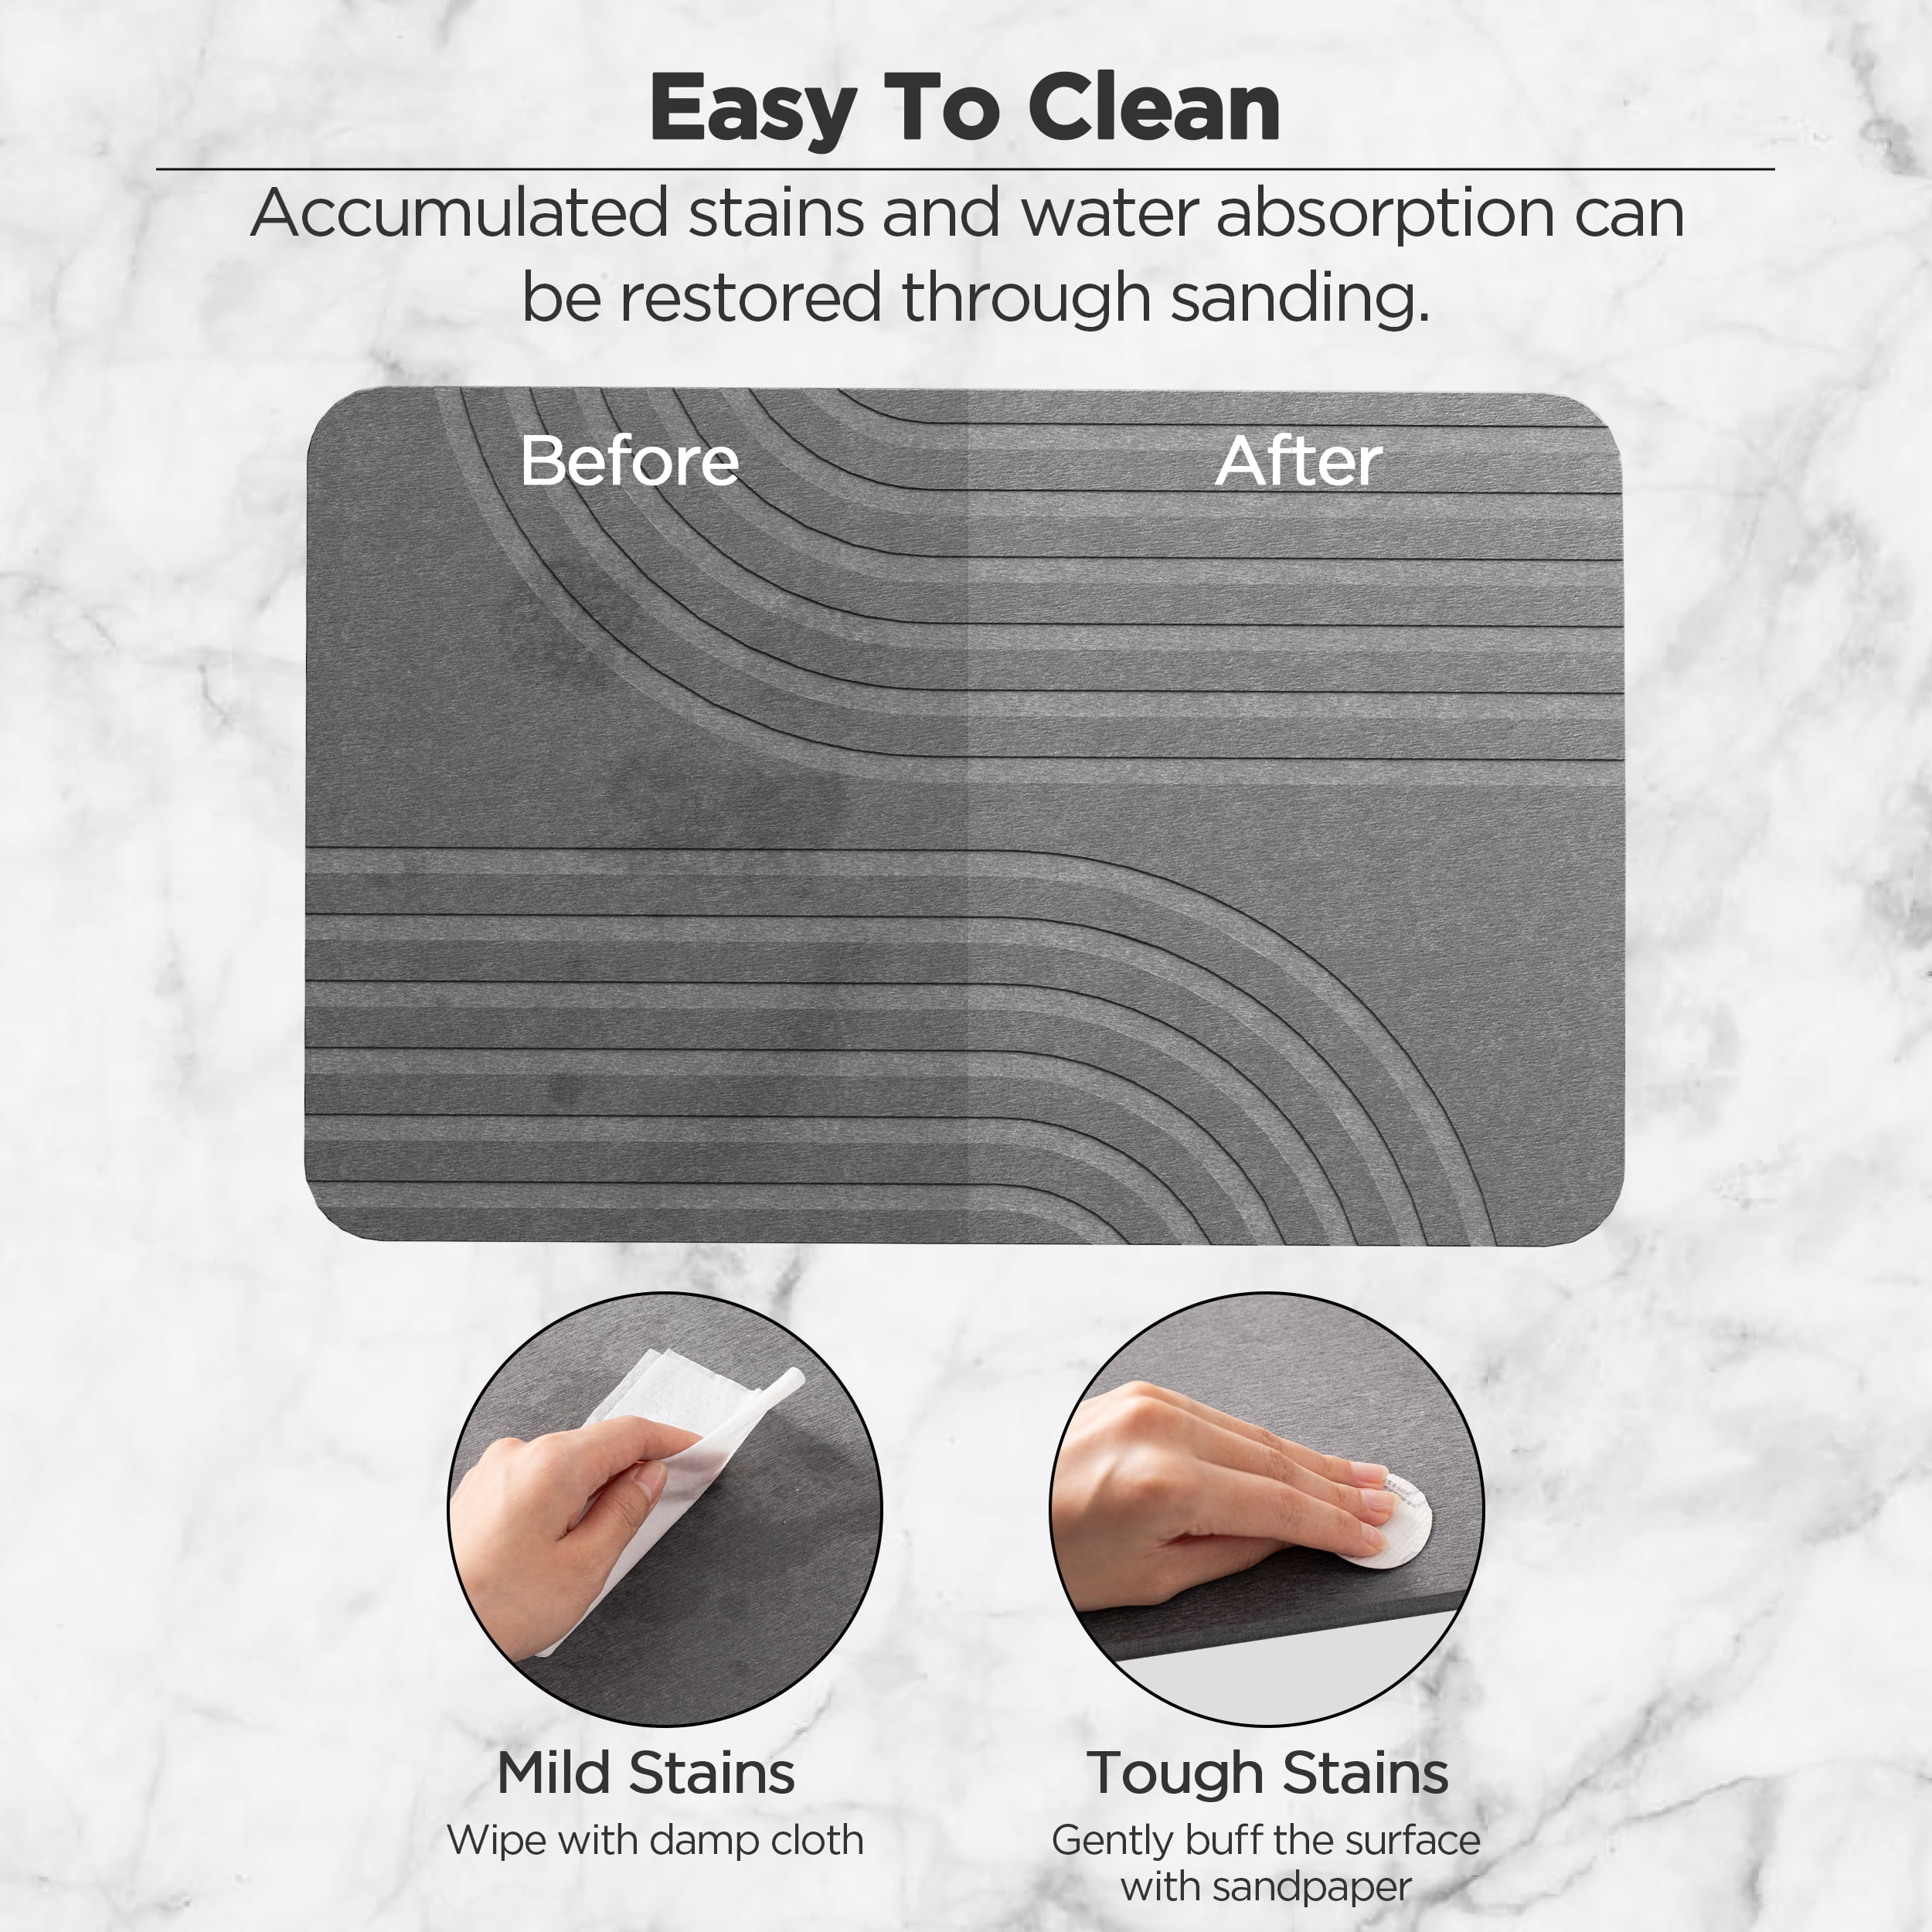 Stone Bath Mat, Diatomaceous Earth Shower Mat,Kitchen mats， Non-Slip Super  Absorbent Quick Drying Bathroom Floor Mat, Natural, Easy to Clean (24 *